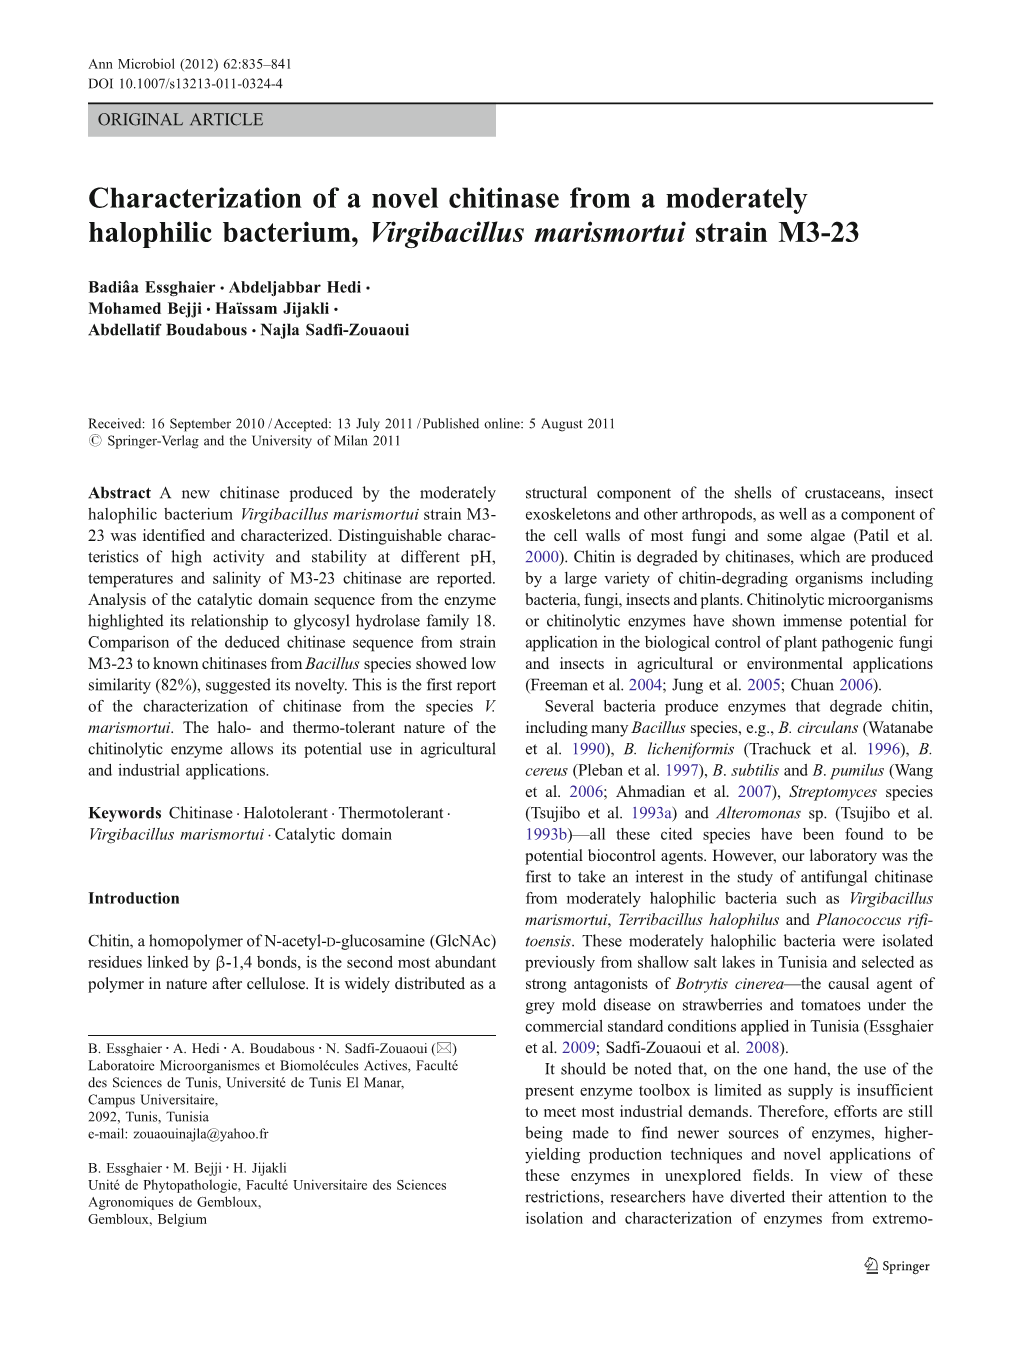 Characterization of a Novel Chitinase from a Moderately Halophilic Bacterium, Virgibacillus Marismortui Strain M3-23